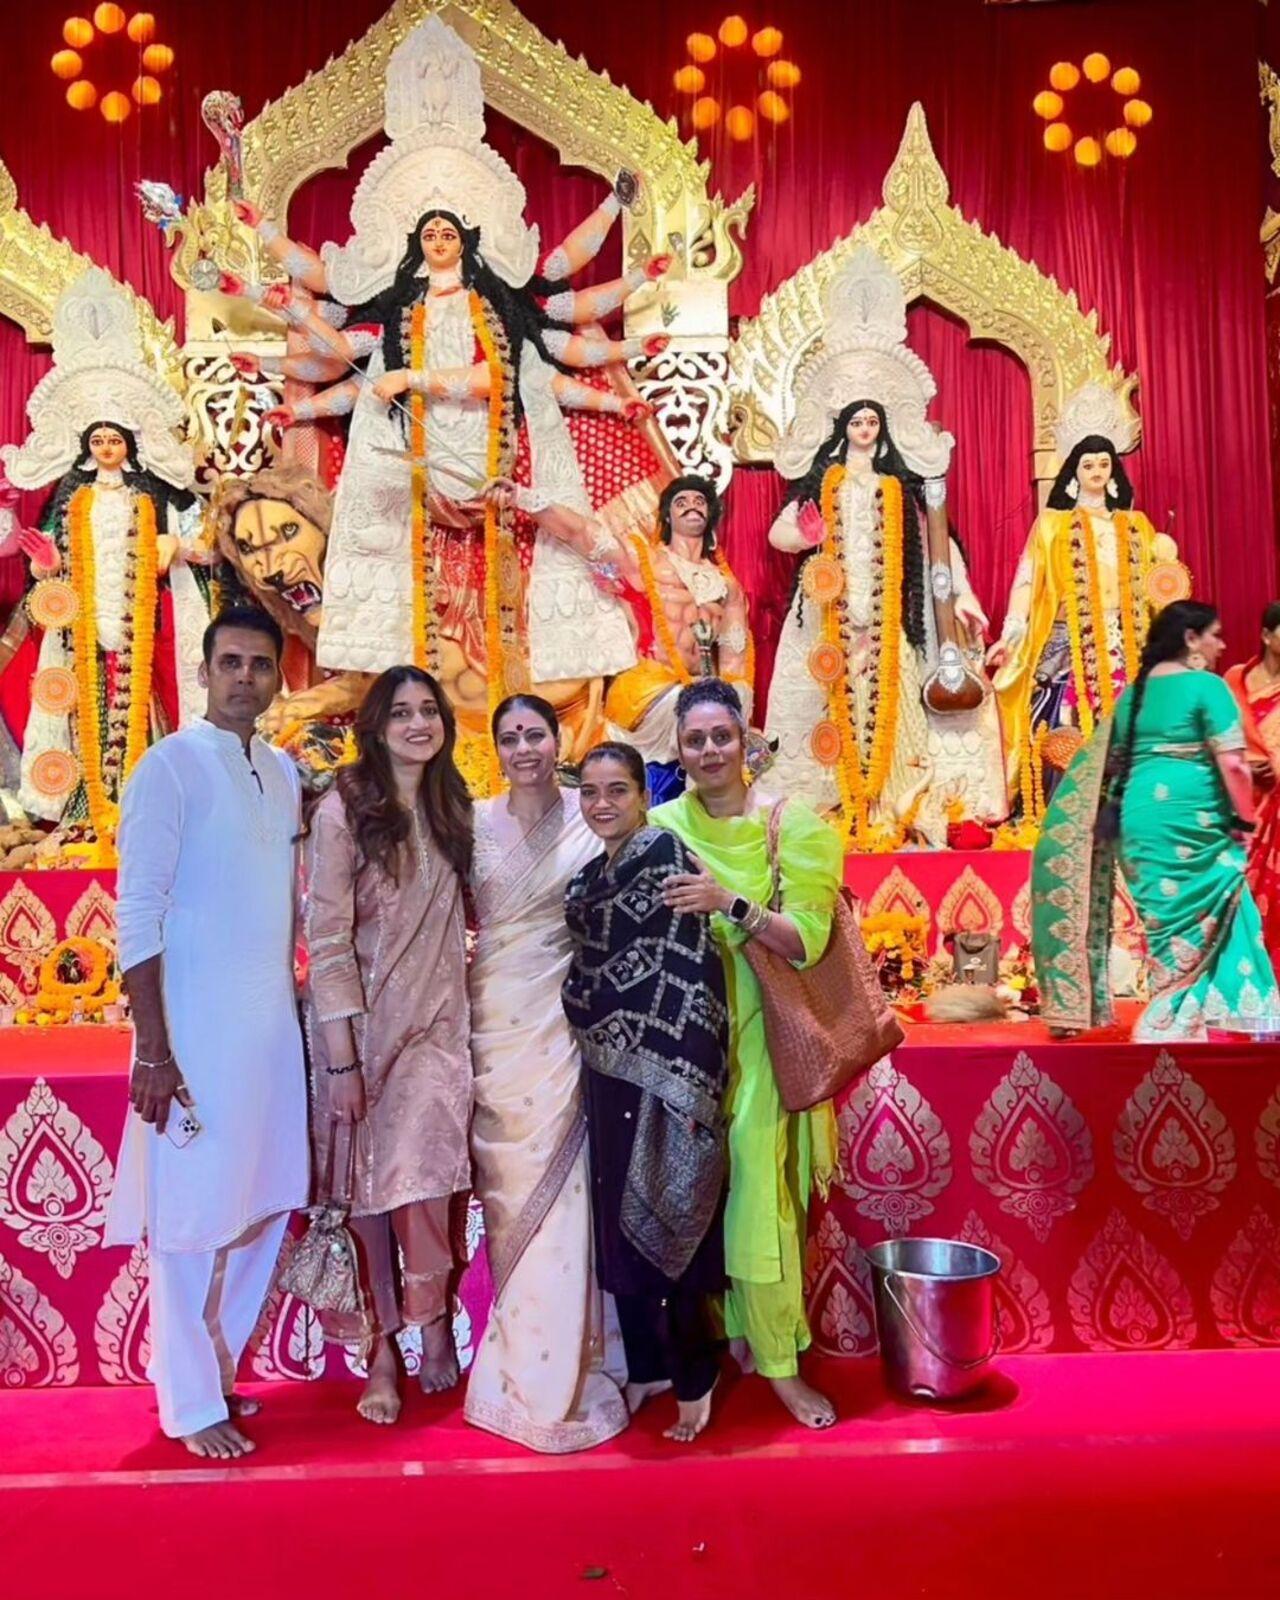 Kajol poses with family members at the pandal